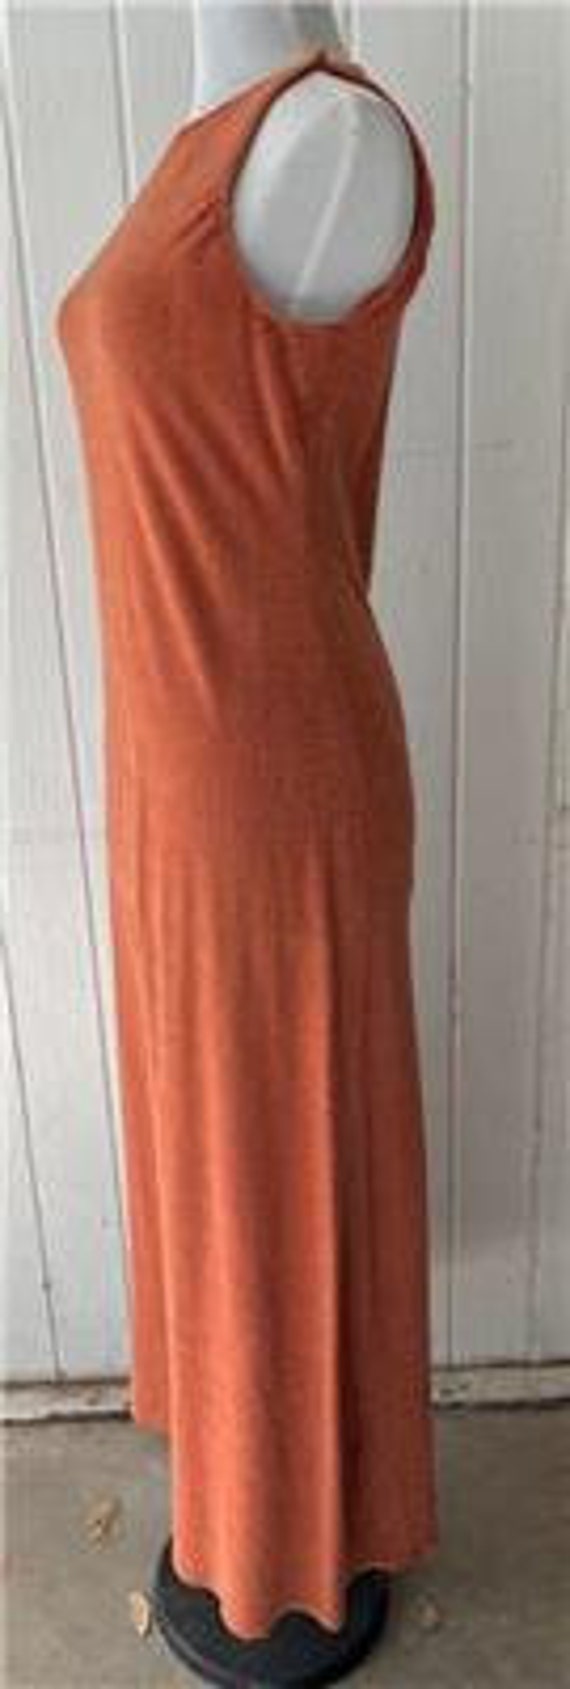 Vtg 1970's Long Terry Cloth Dress sz Small Sienna - image 3